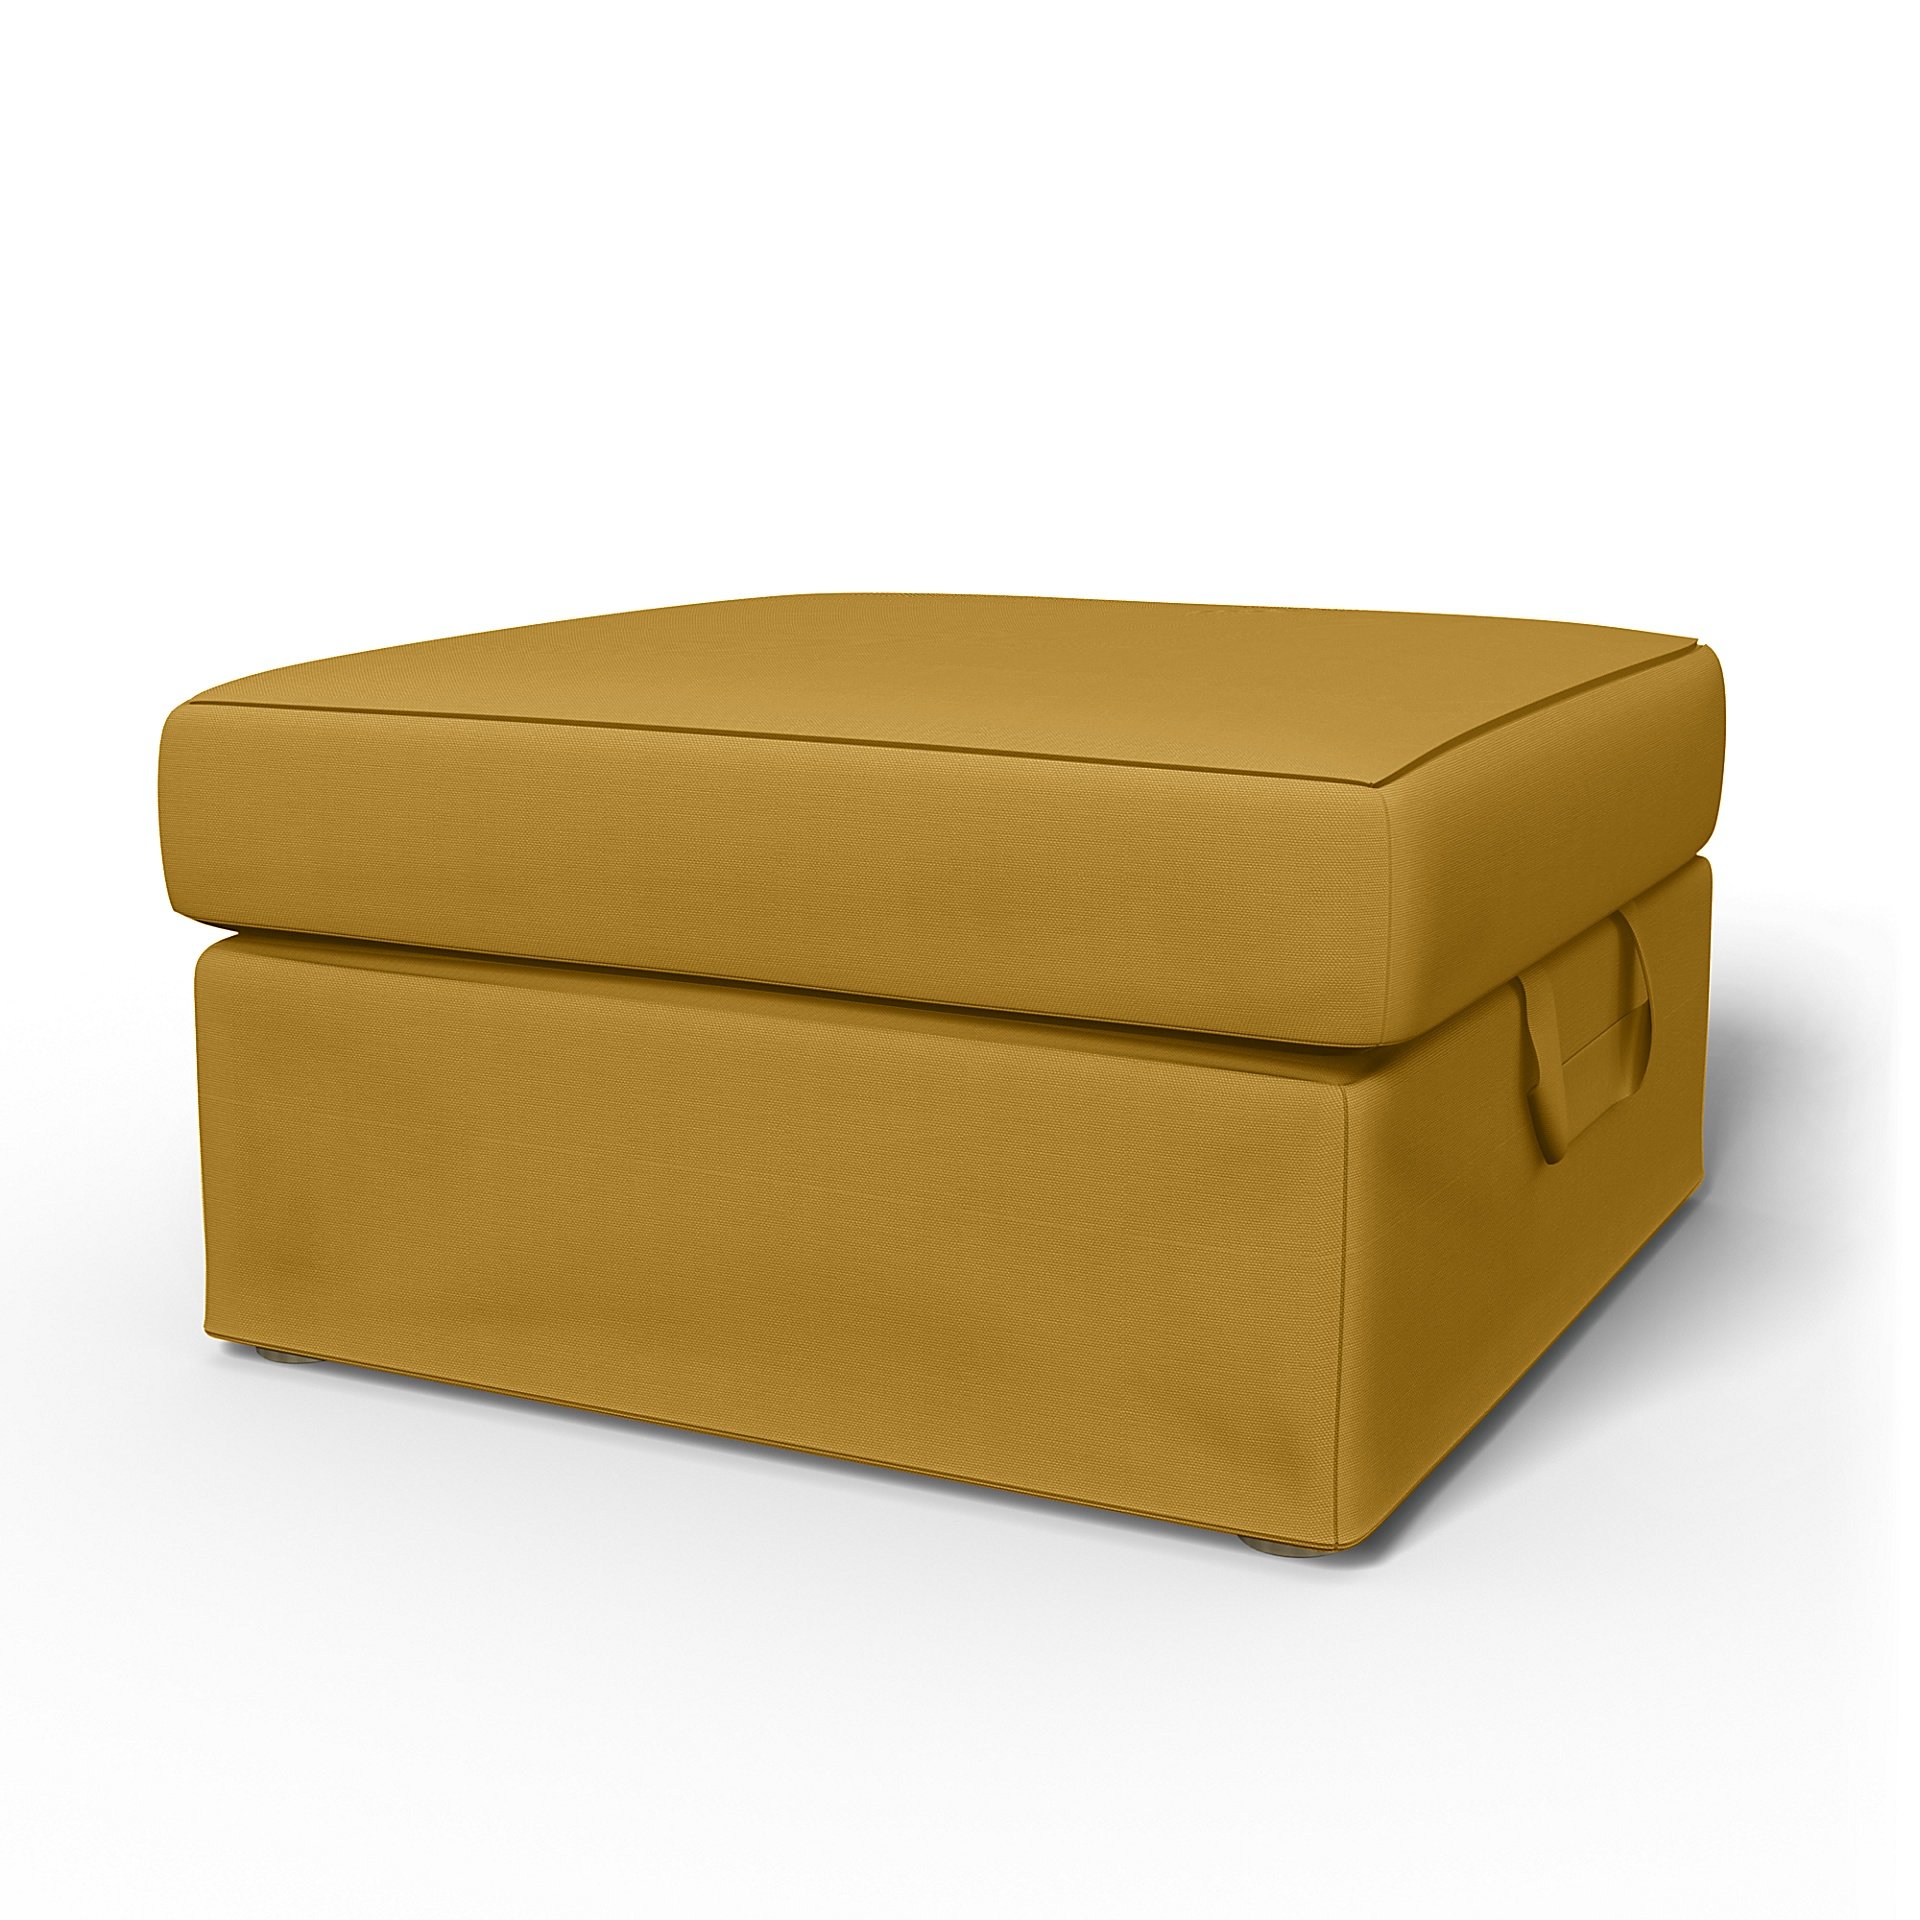 IKEA - Tomelilla Foto Footstool Cover, Honey Mustard, Cotton - Bemz